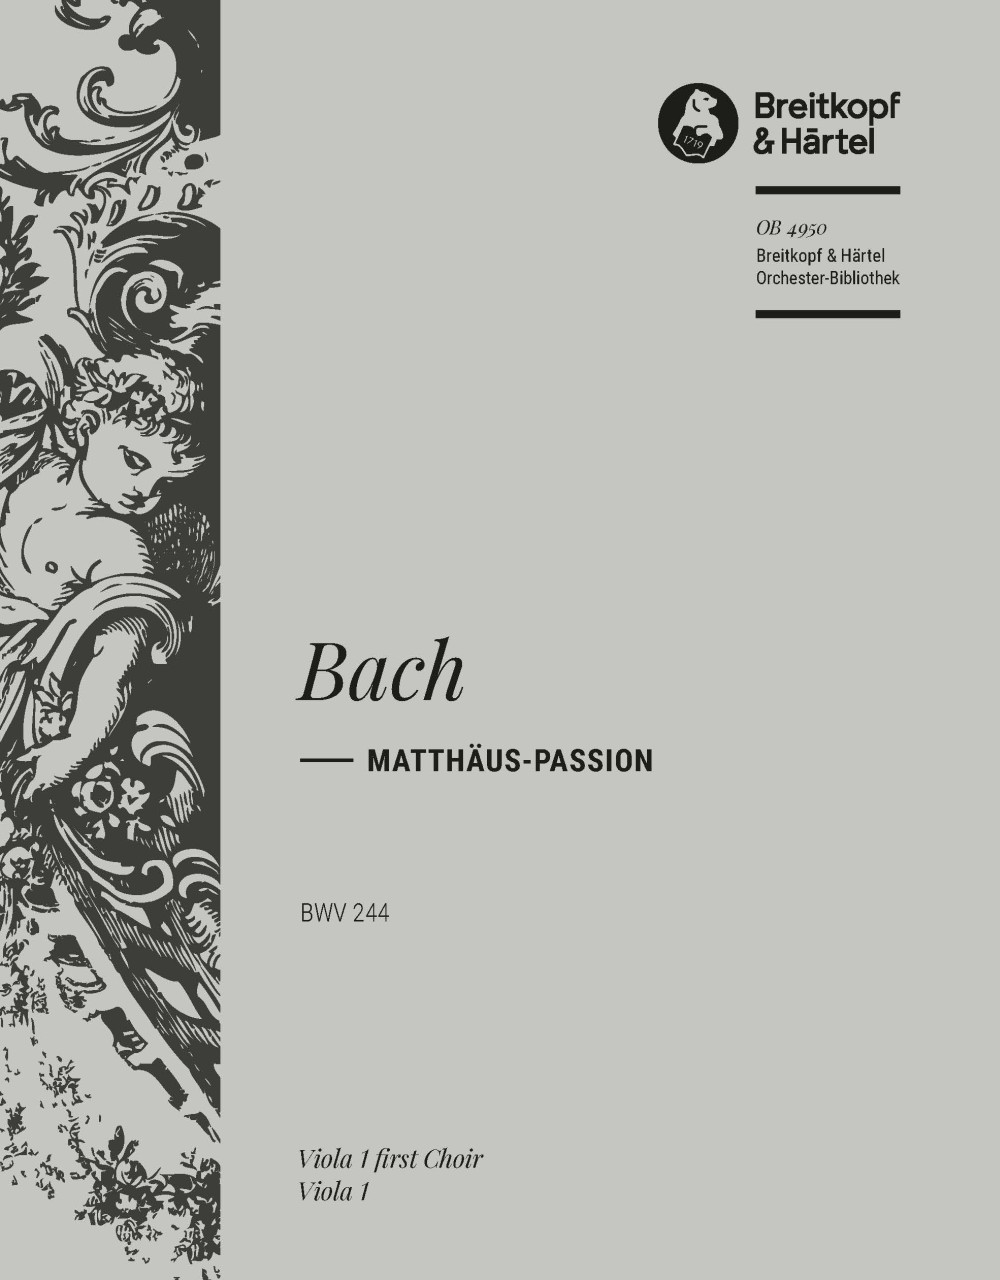 Matthäus-Passion Bwv 244 (BACH JOHANN SEBASTIAN)